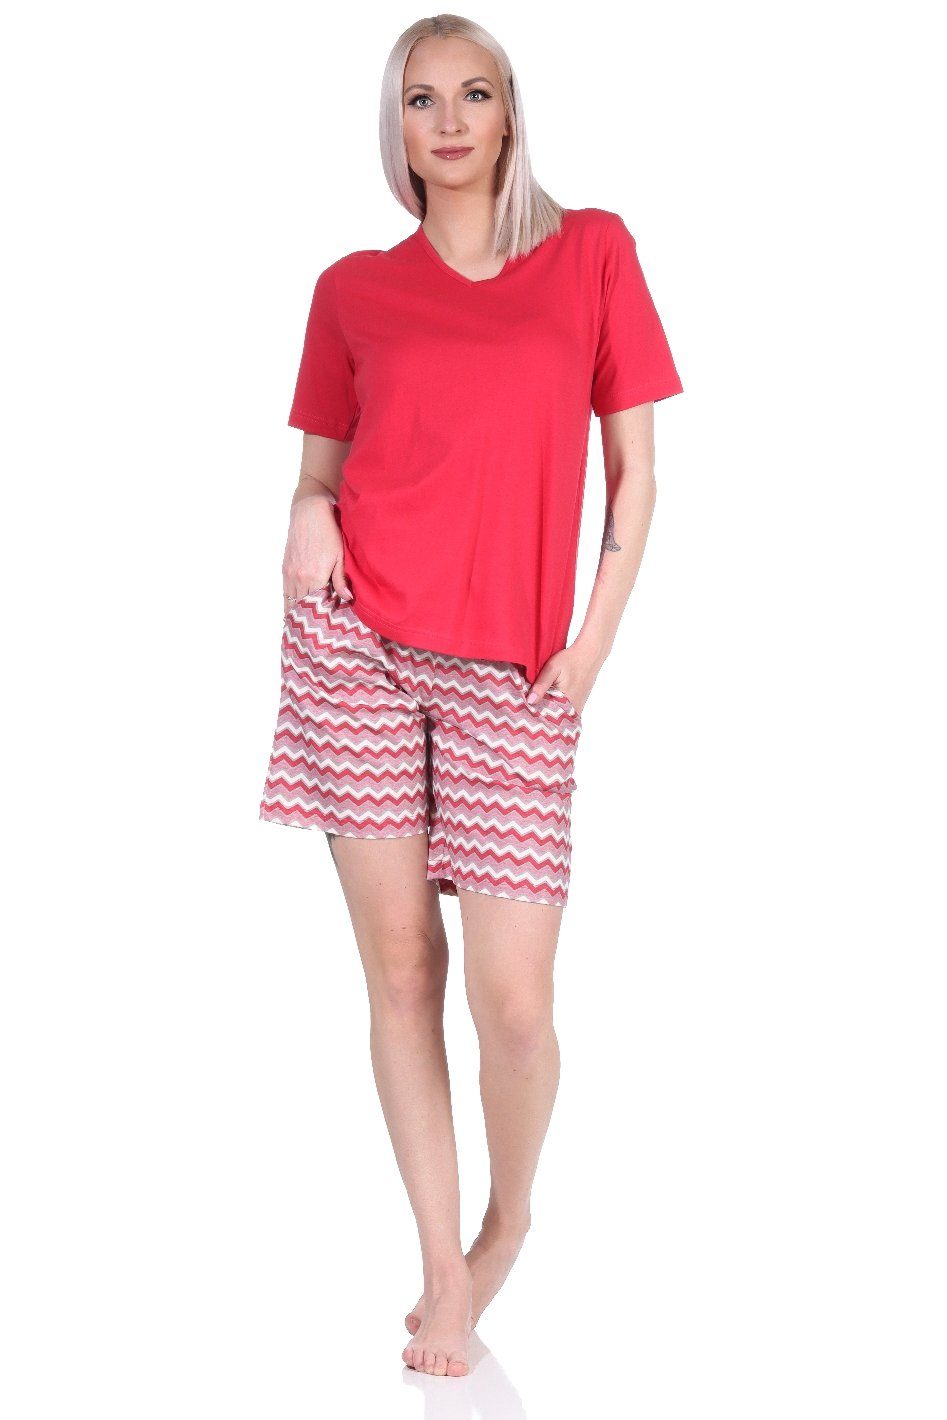 Normann Pyjama Damen Shorty Pyjama in rot kurz strahlenden Farben mit gemusterten Shorts